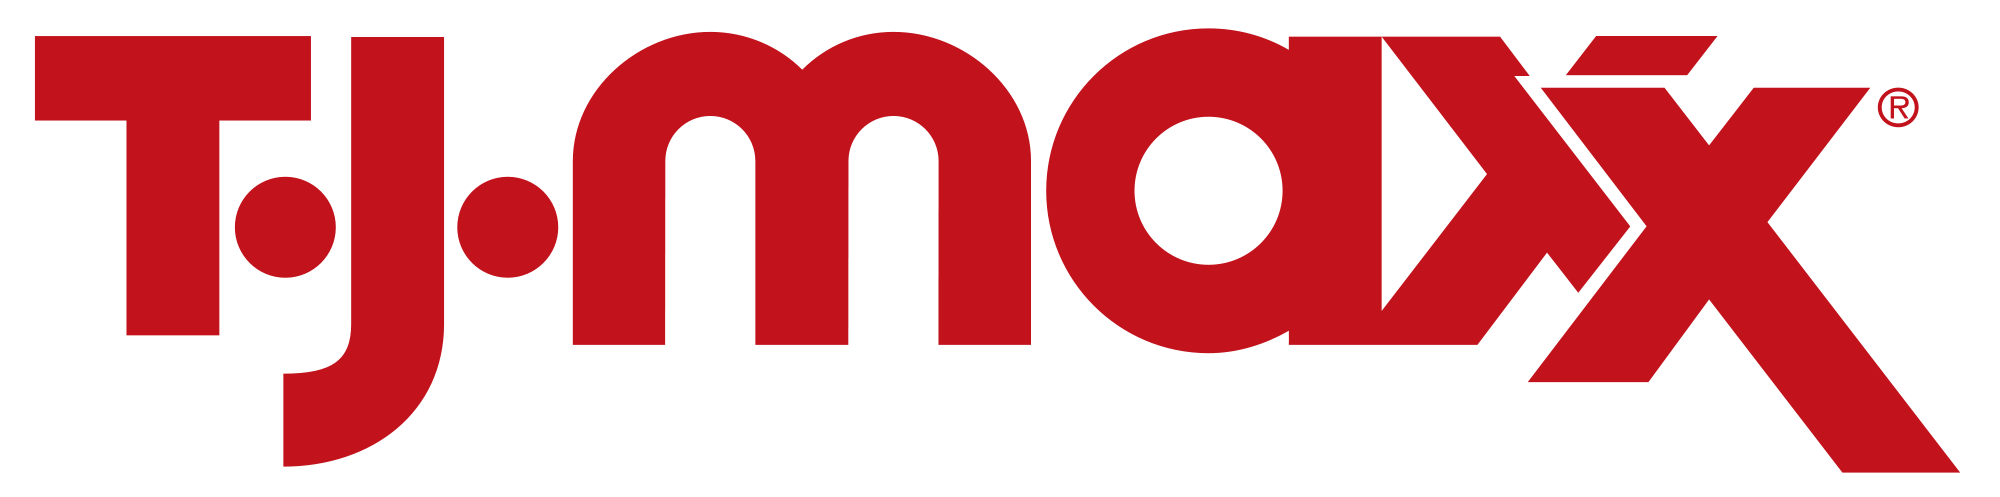 T.J. Maxx Brand Logo